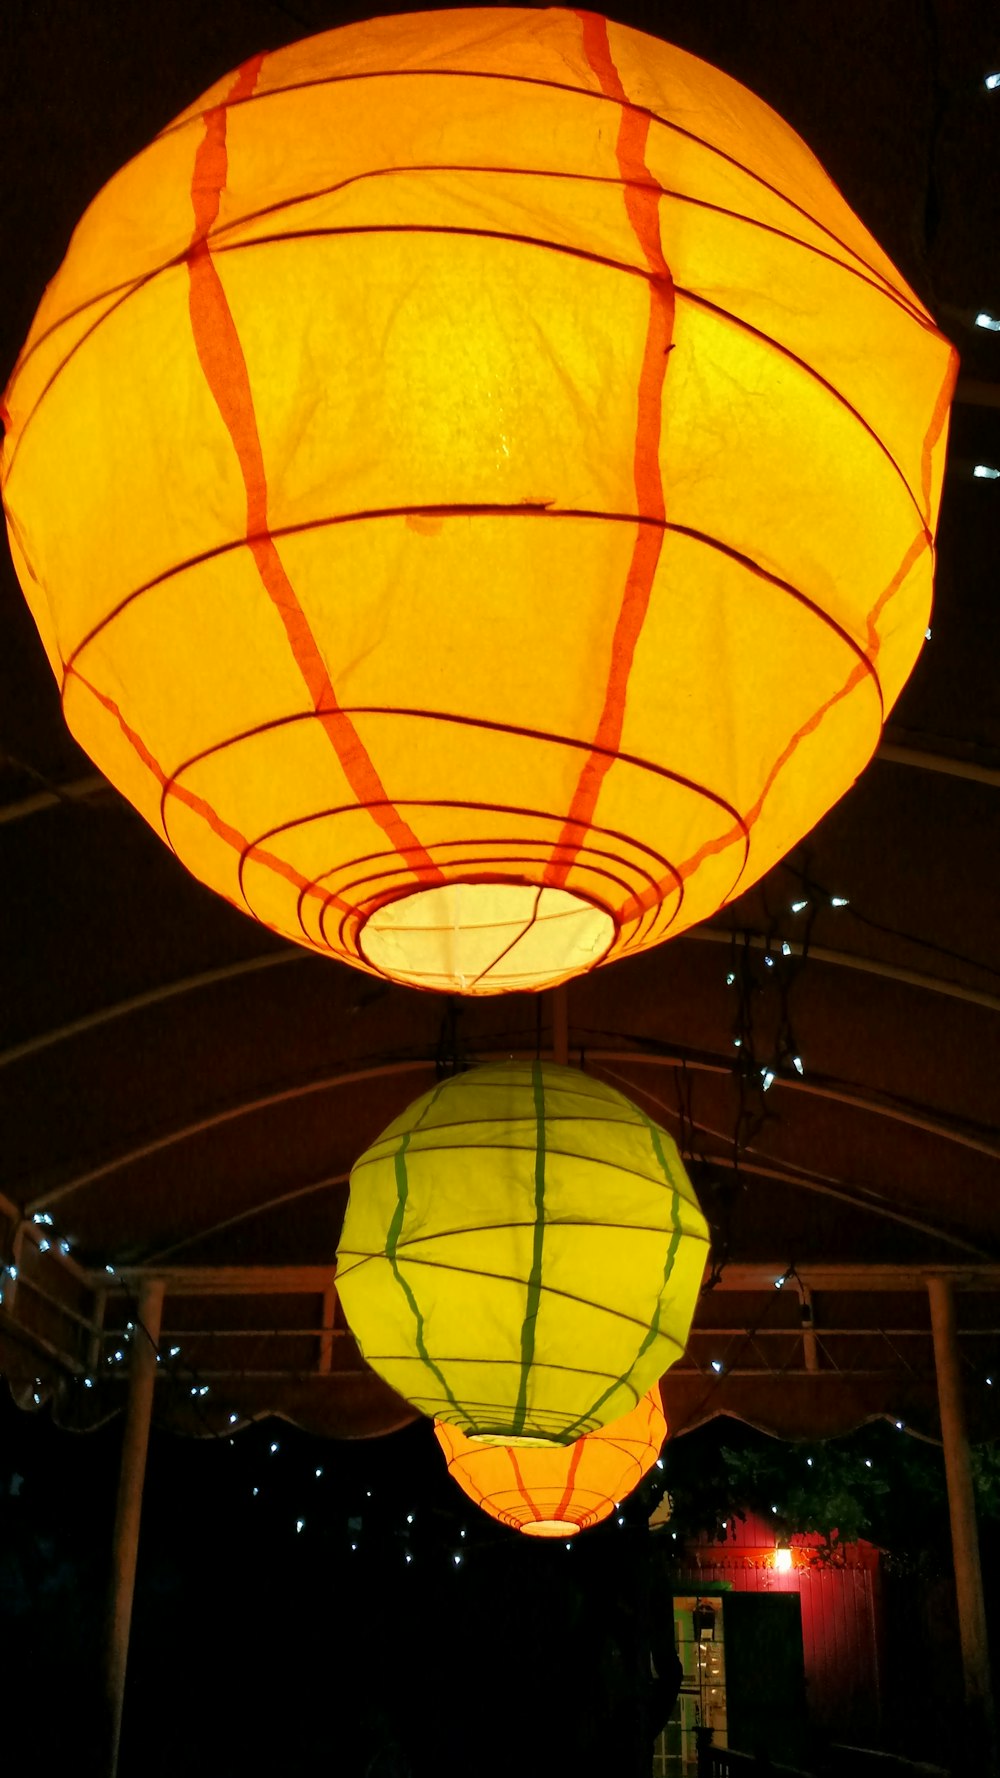 Un paio di lanterne gialle appese a un soffitto